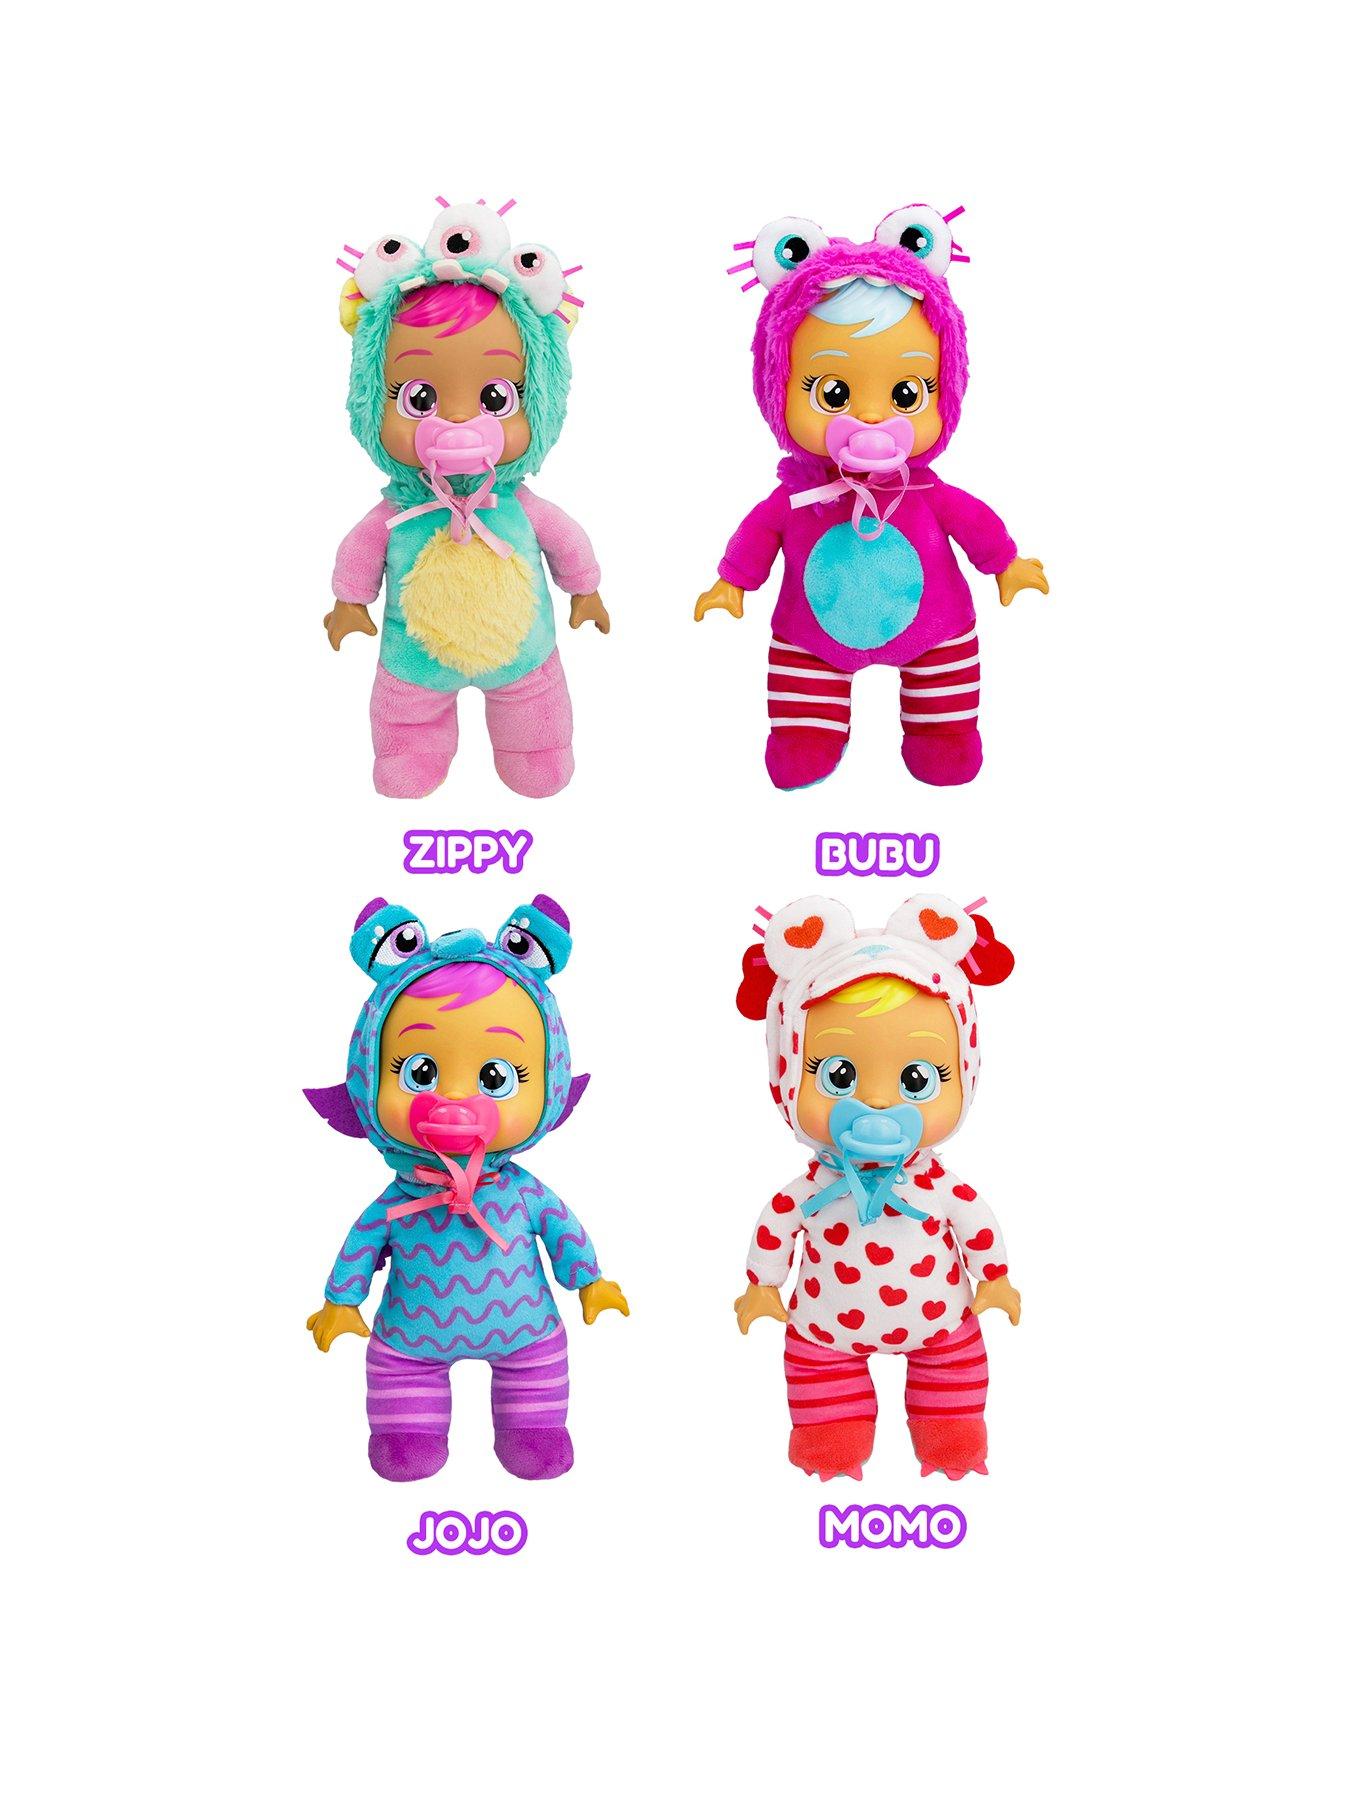 Cry Babies Magic Tears Stars Talent Babies Doll - Assorted*